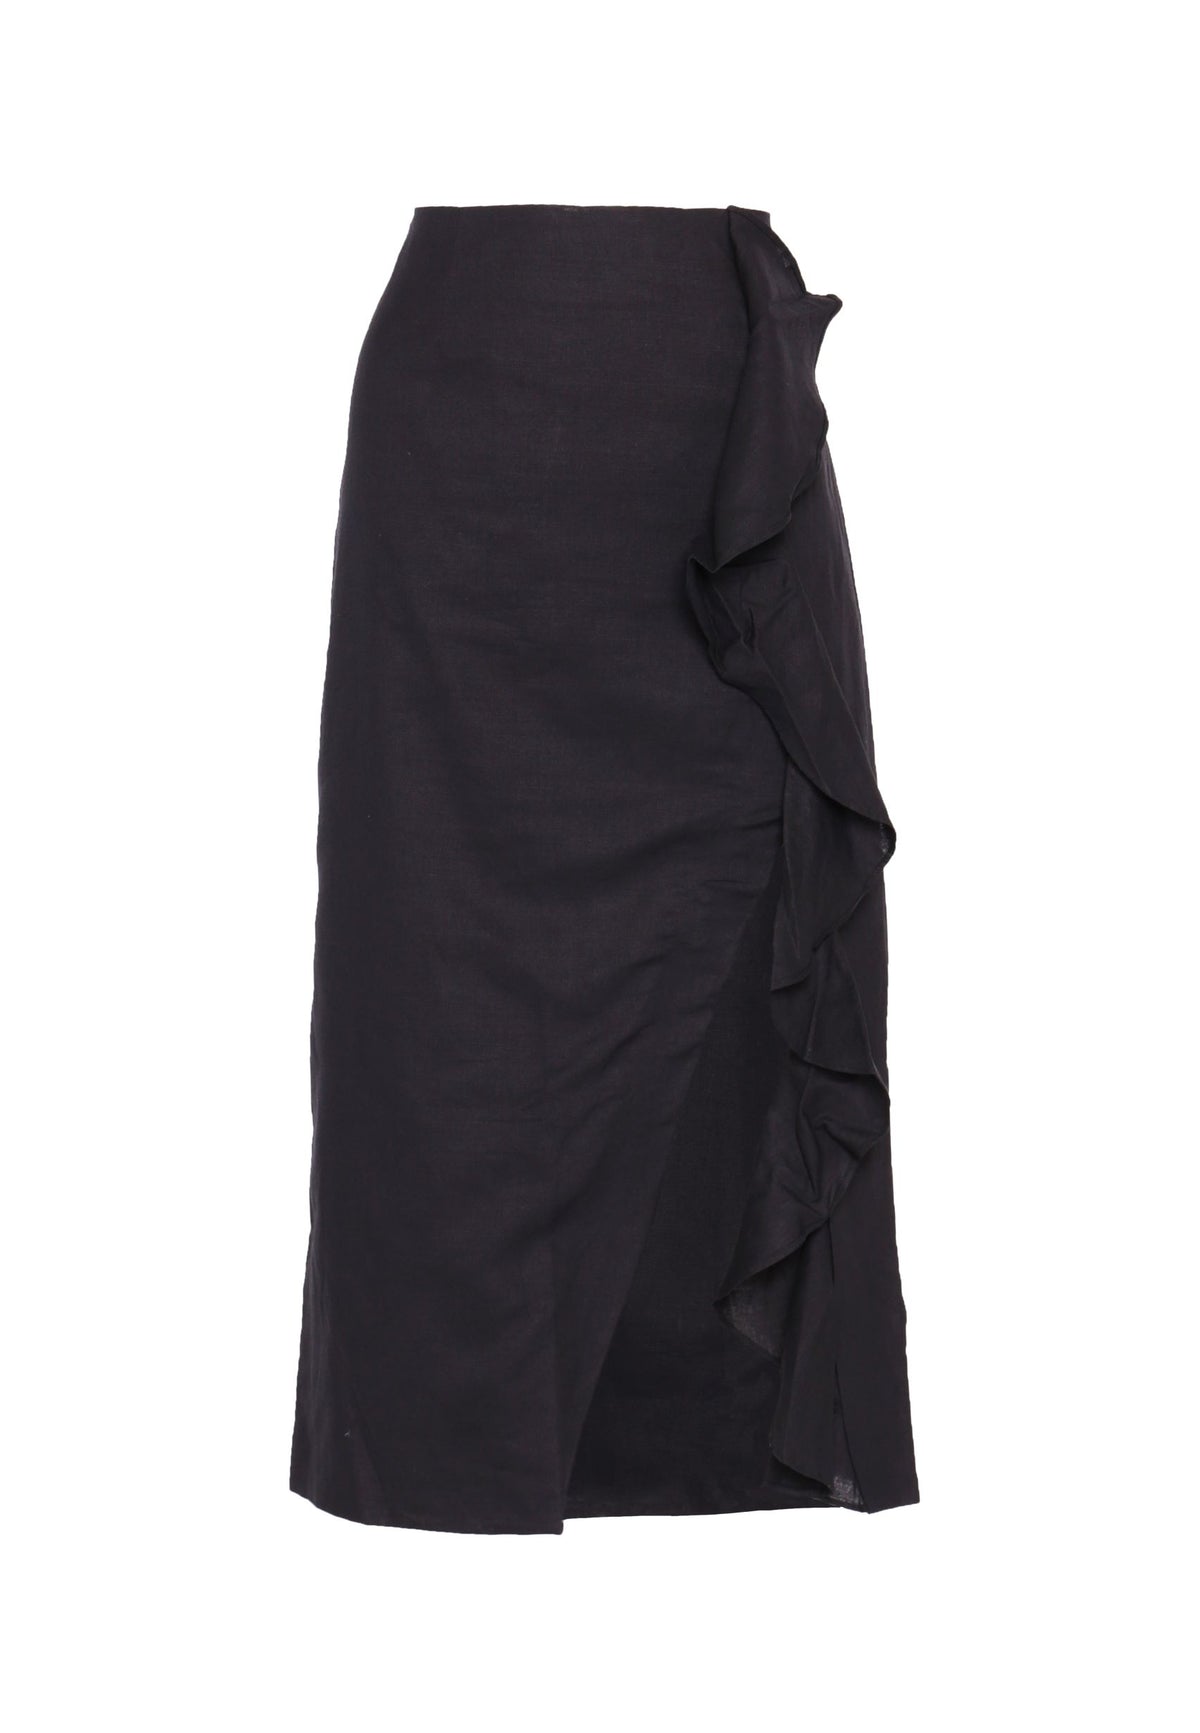 Glamorous Black Linen Look Midi Skirt with Front Side Split and Ruffle Hem